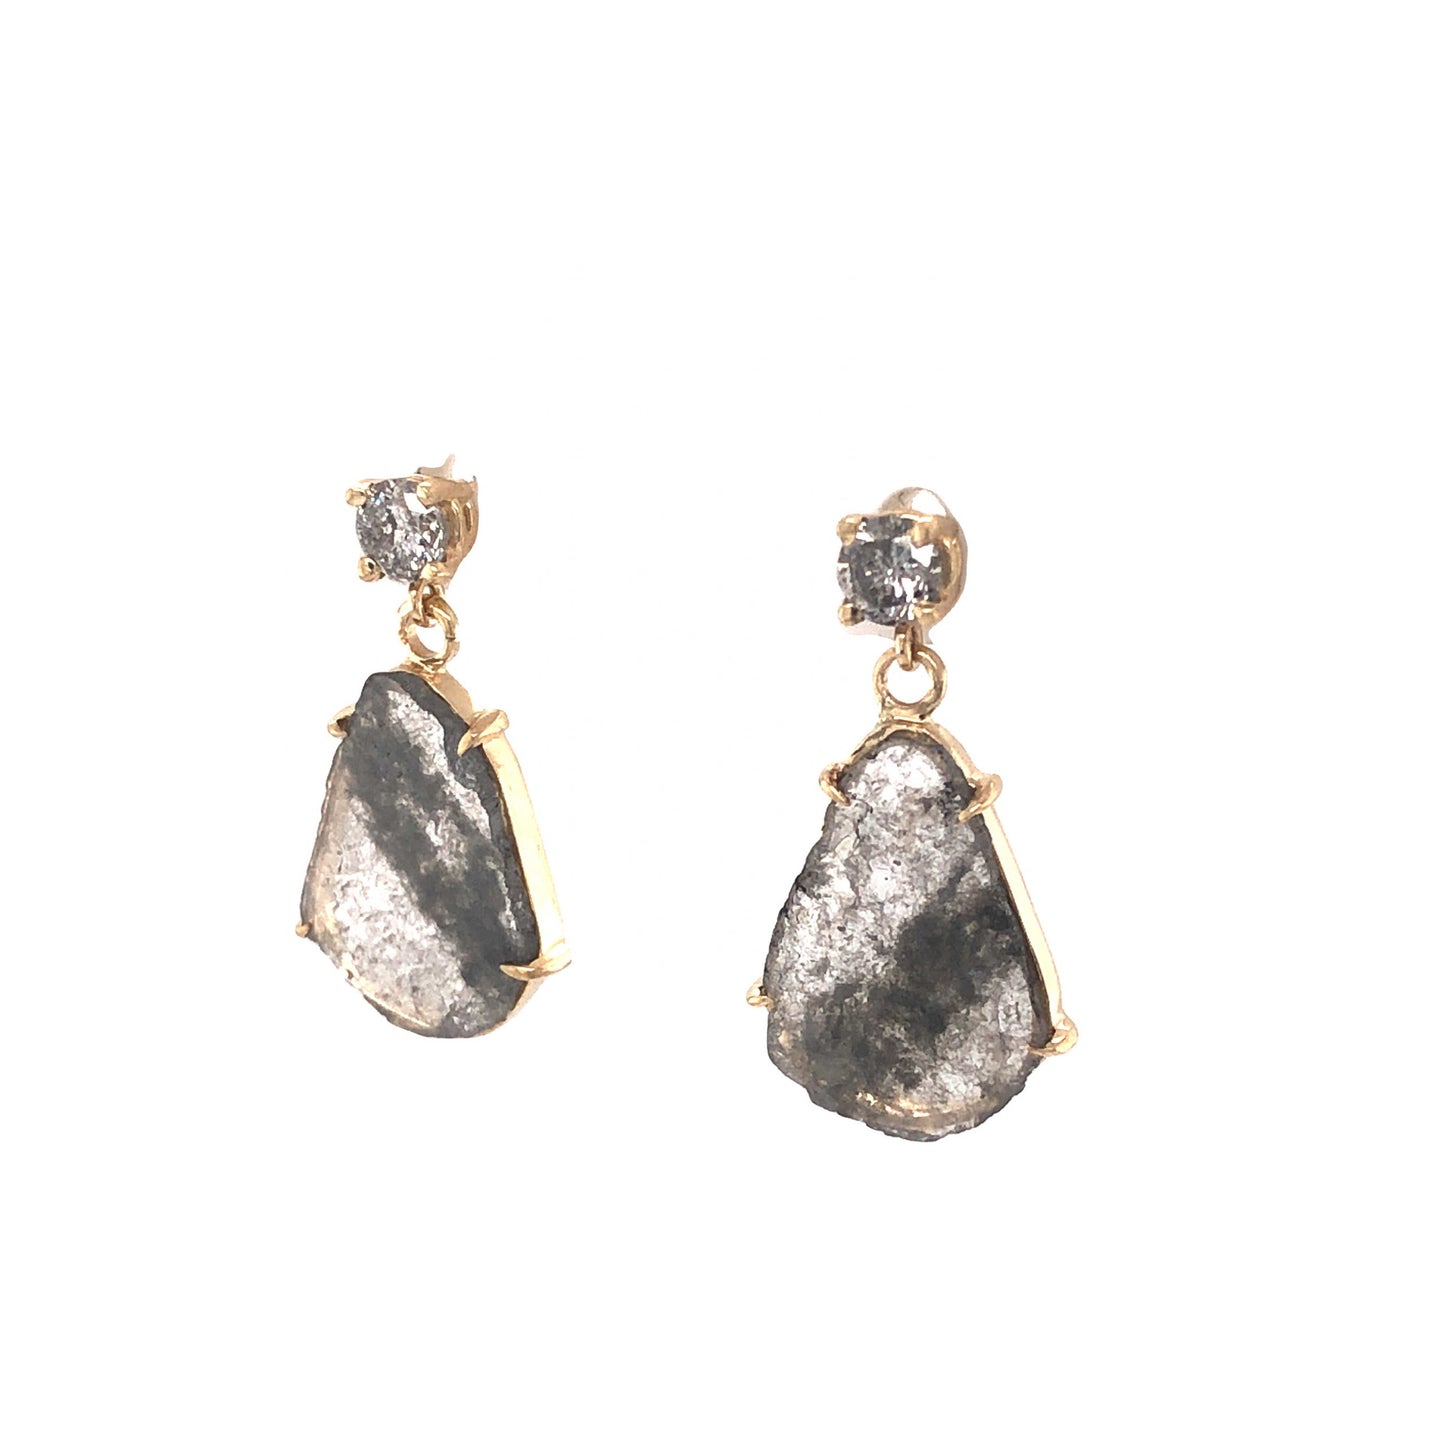 Rustic Diamond Drop Earrings in 14k Yellow Gold